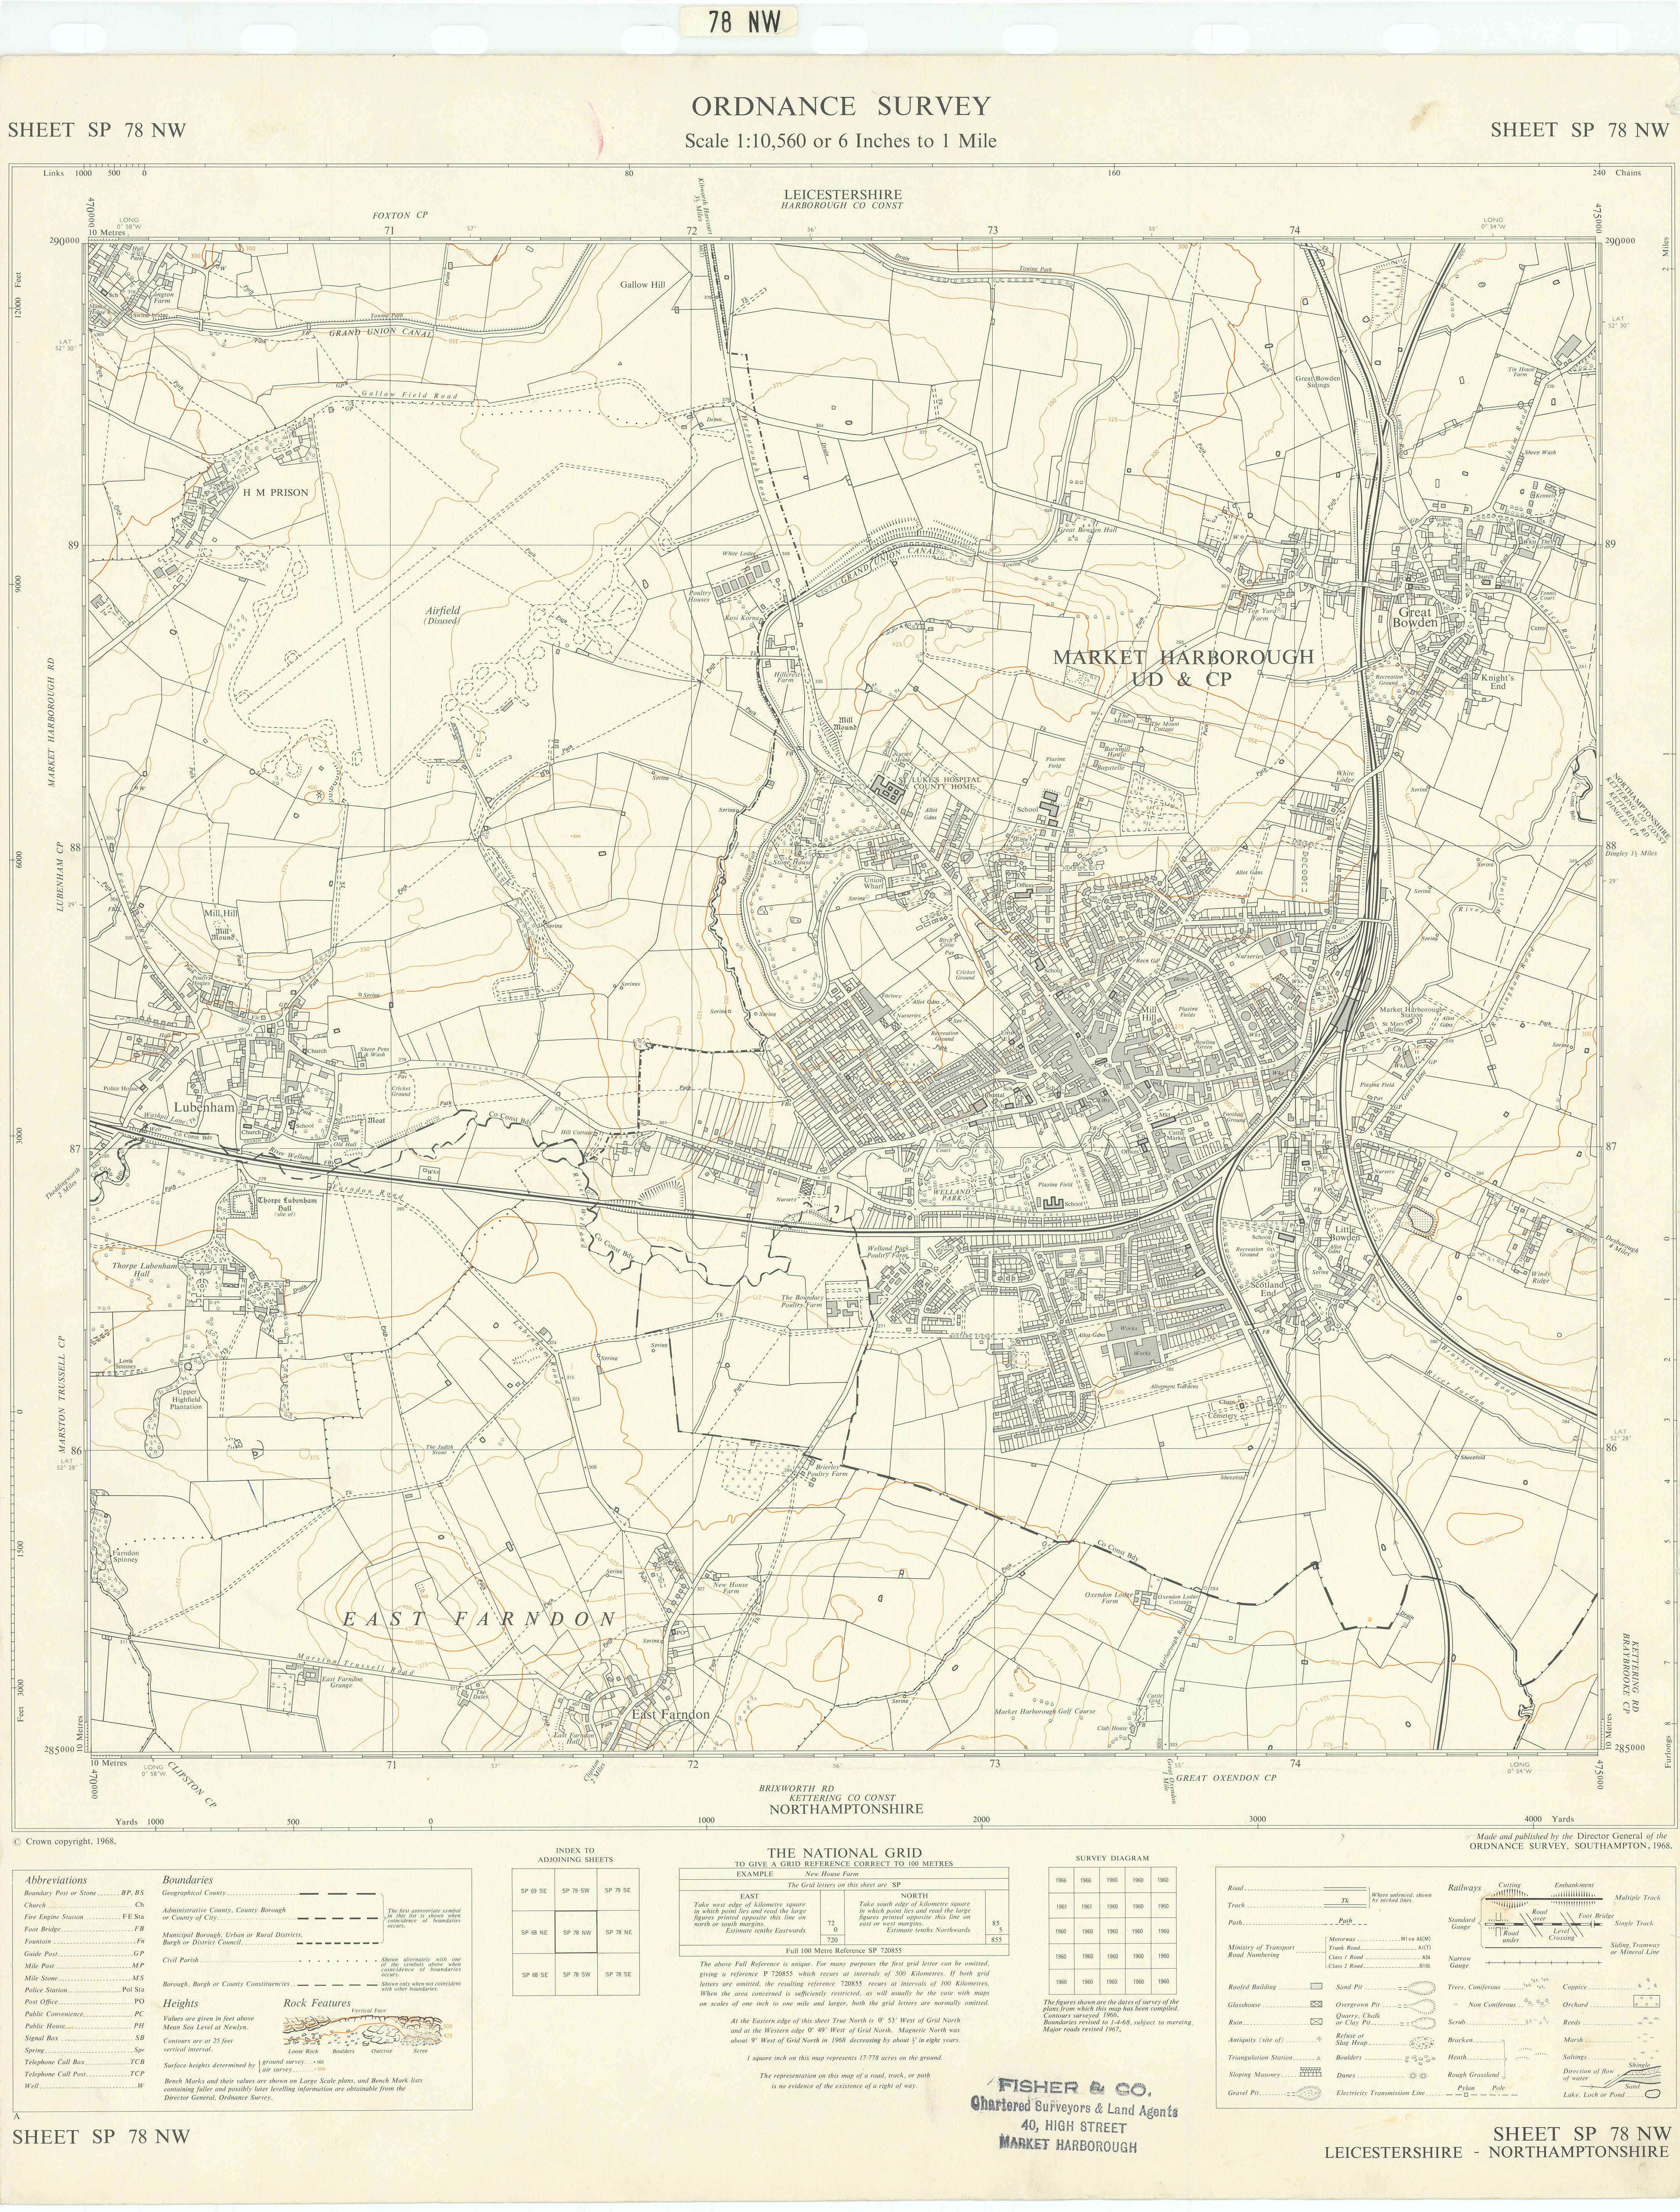 Ordnance Survey SP78NW Leics Markey Harborough Great Bowden Lubenham 1968 map